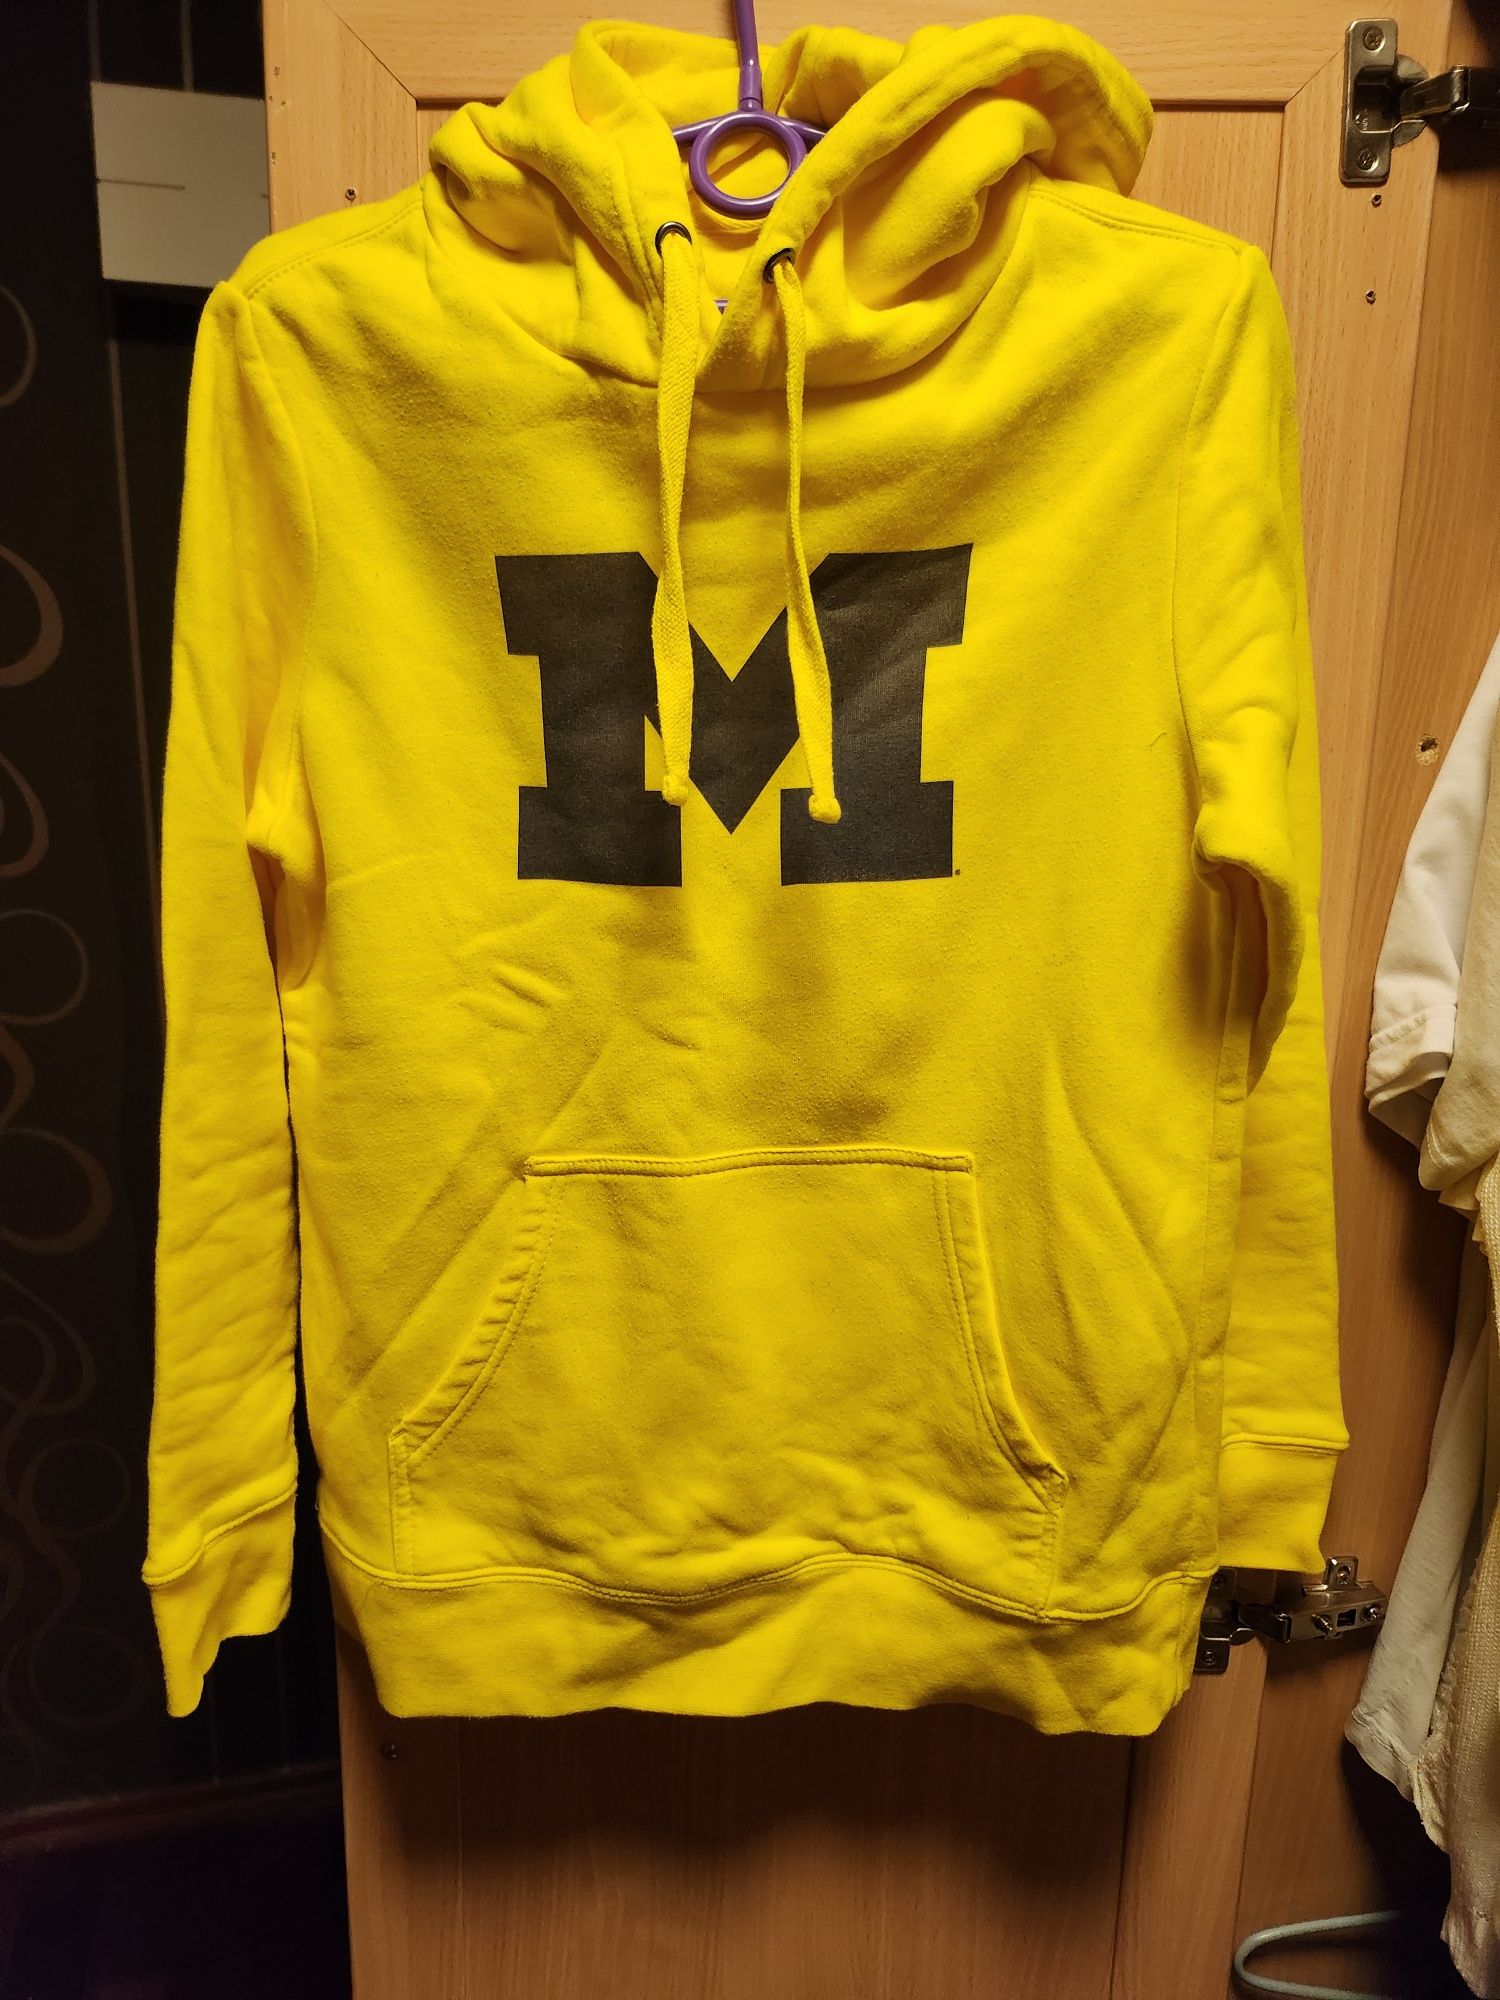 Bluza Michigan żółta litera M fanatics M piękna lato